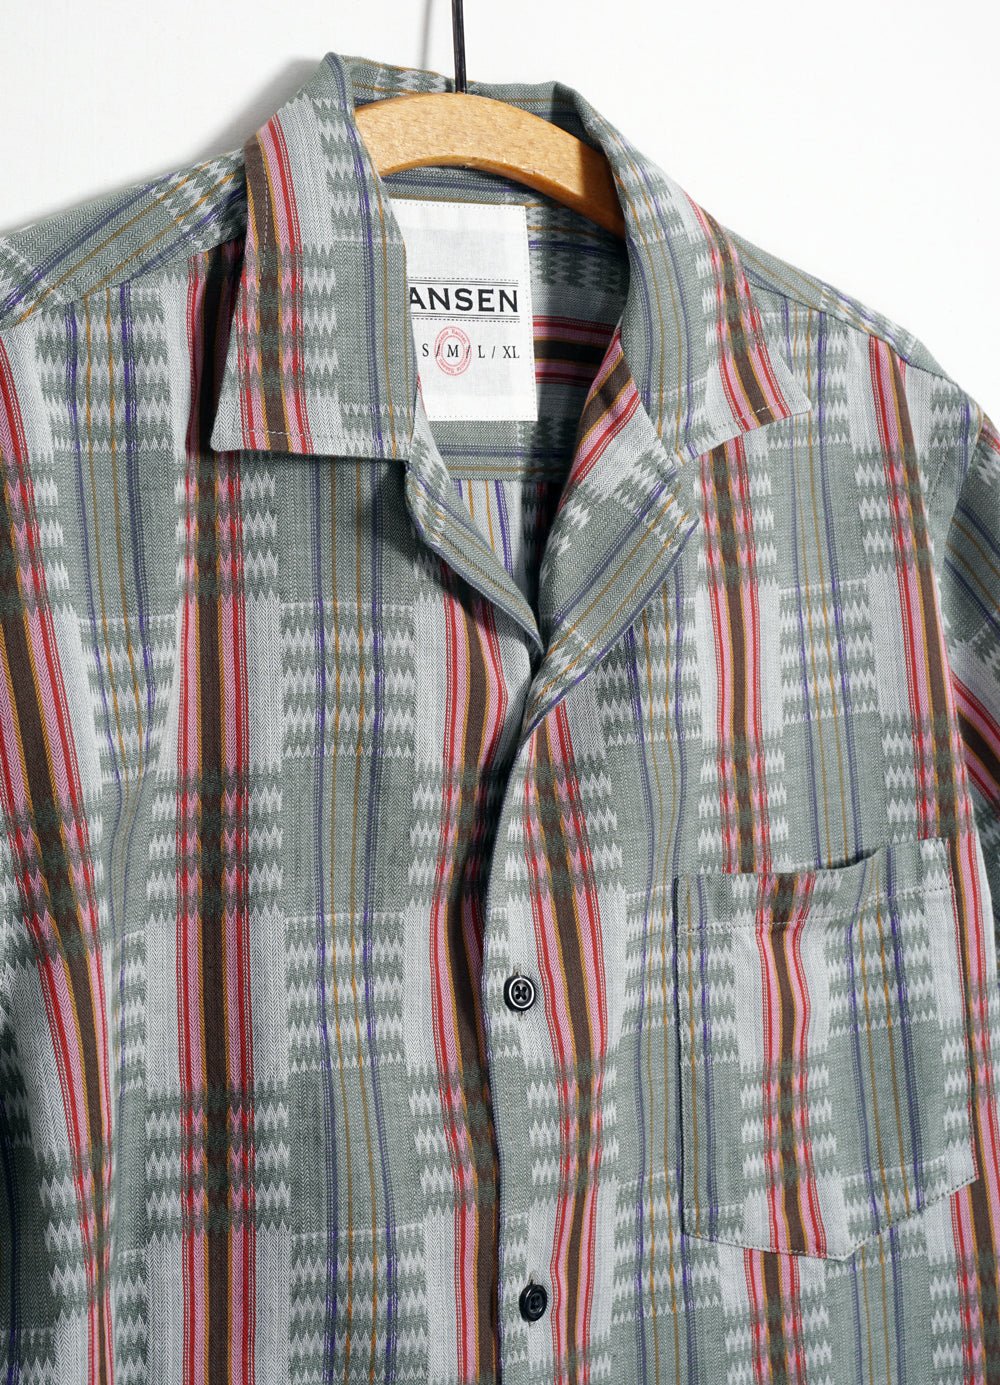 HANSEN GARMENTS - JONNY | Short Sleeve Shirt | Multi Colour - HANSEN Garments